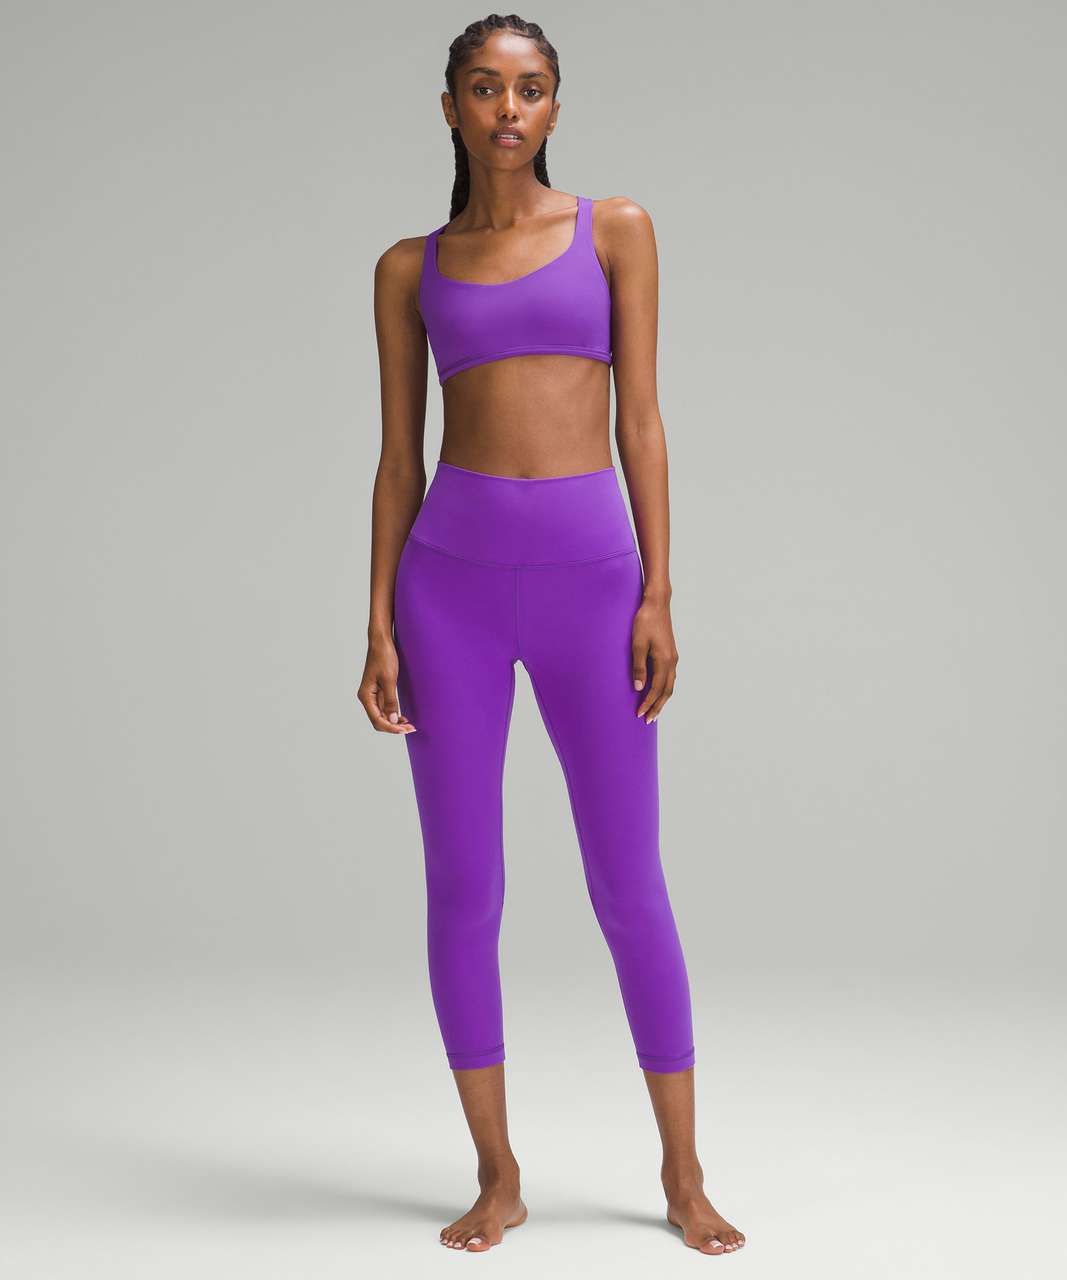 Lululemon Leggings 4 Purple - $50 (61% Off Retail) - From Marie